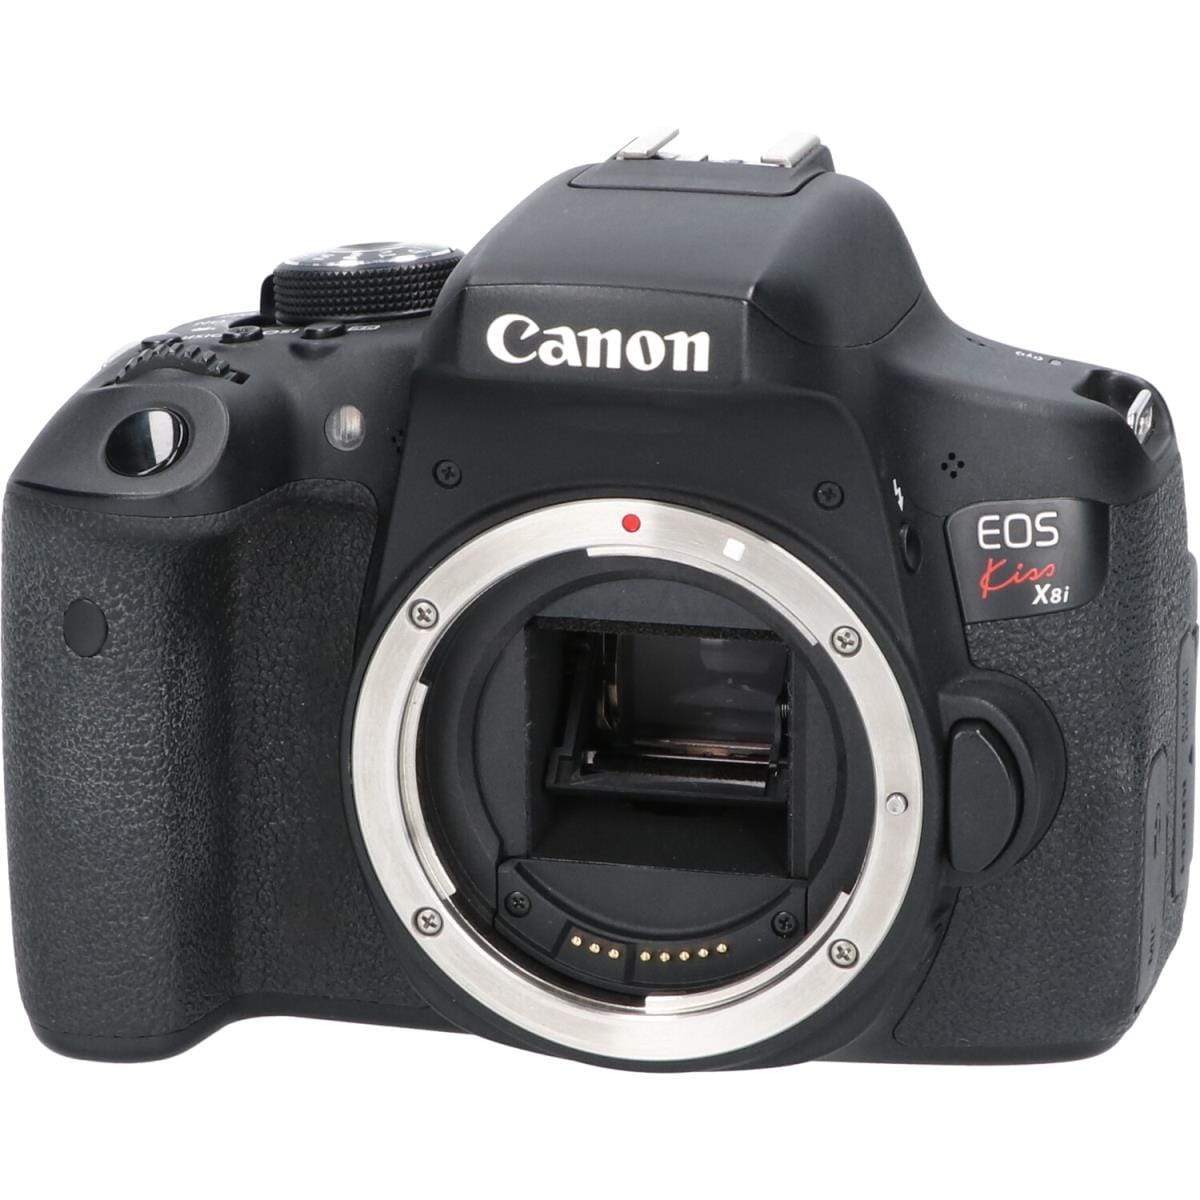 KOMEHYO|CANON EOS KISS X8i|Canon|Camera|Digital SLR|【Official